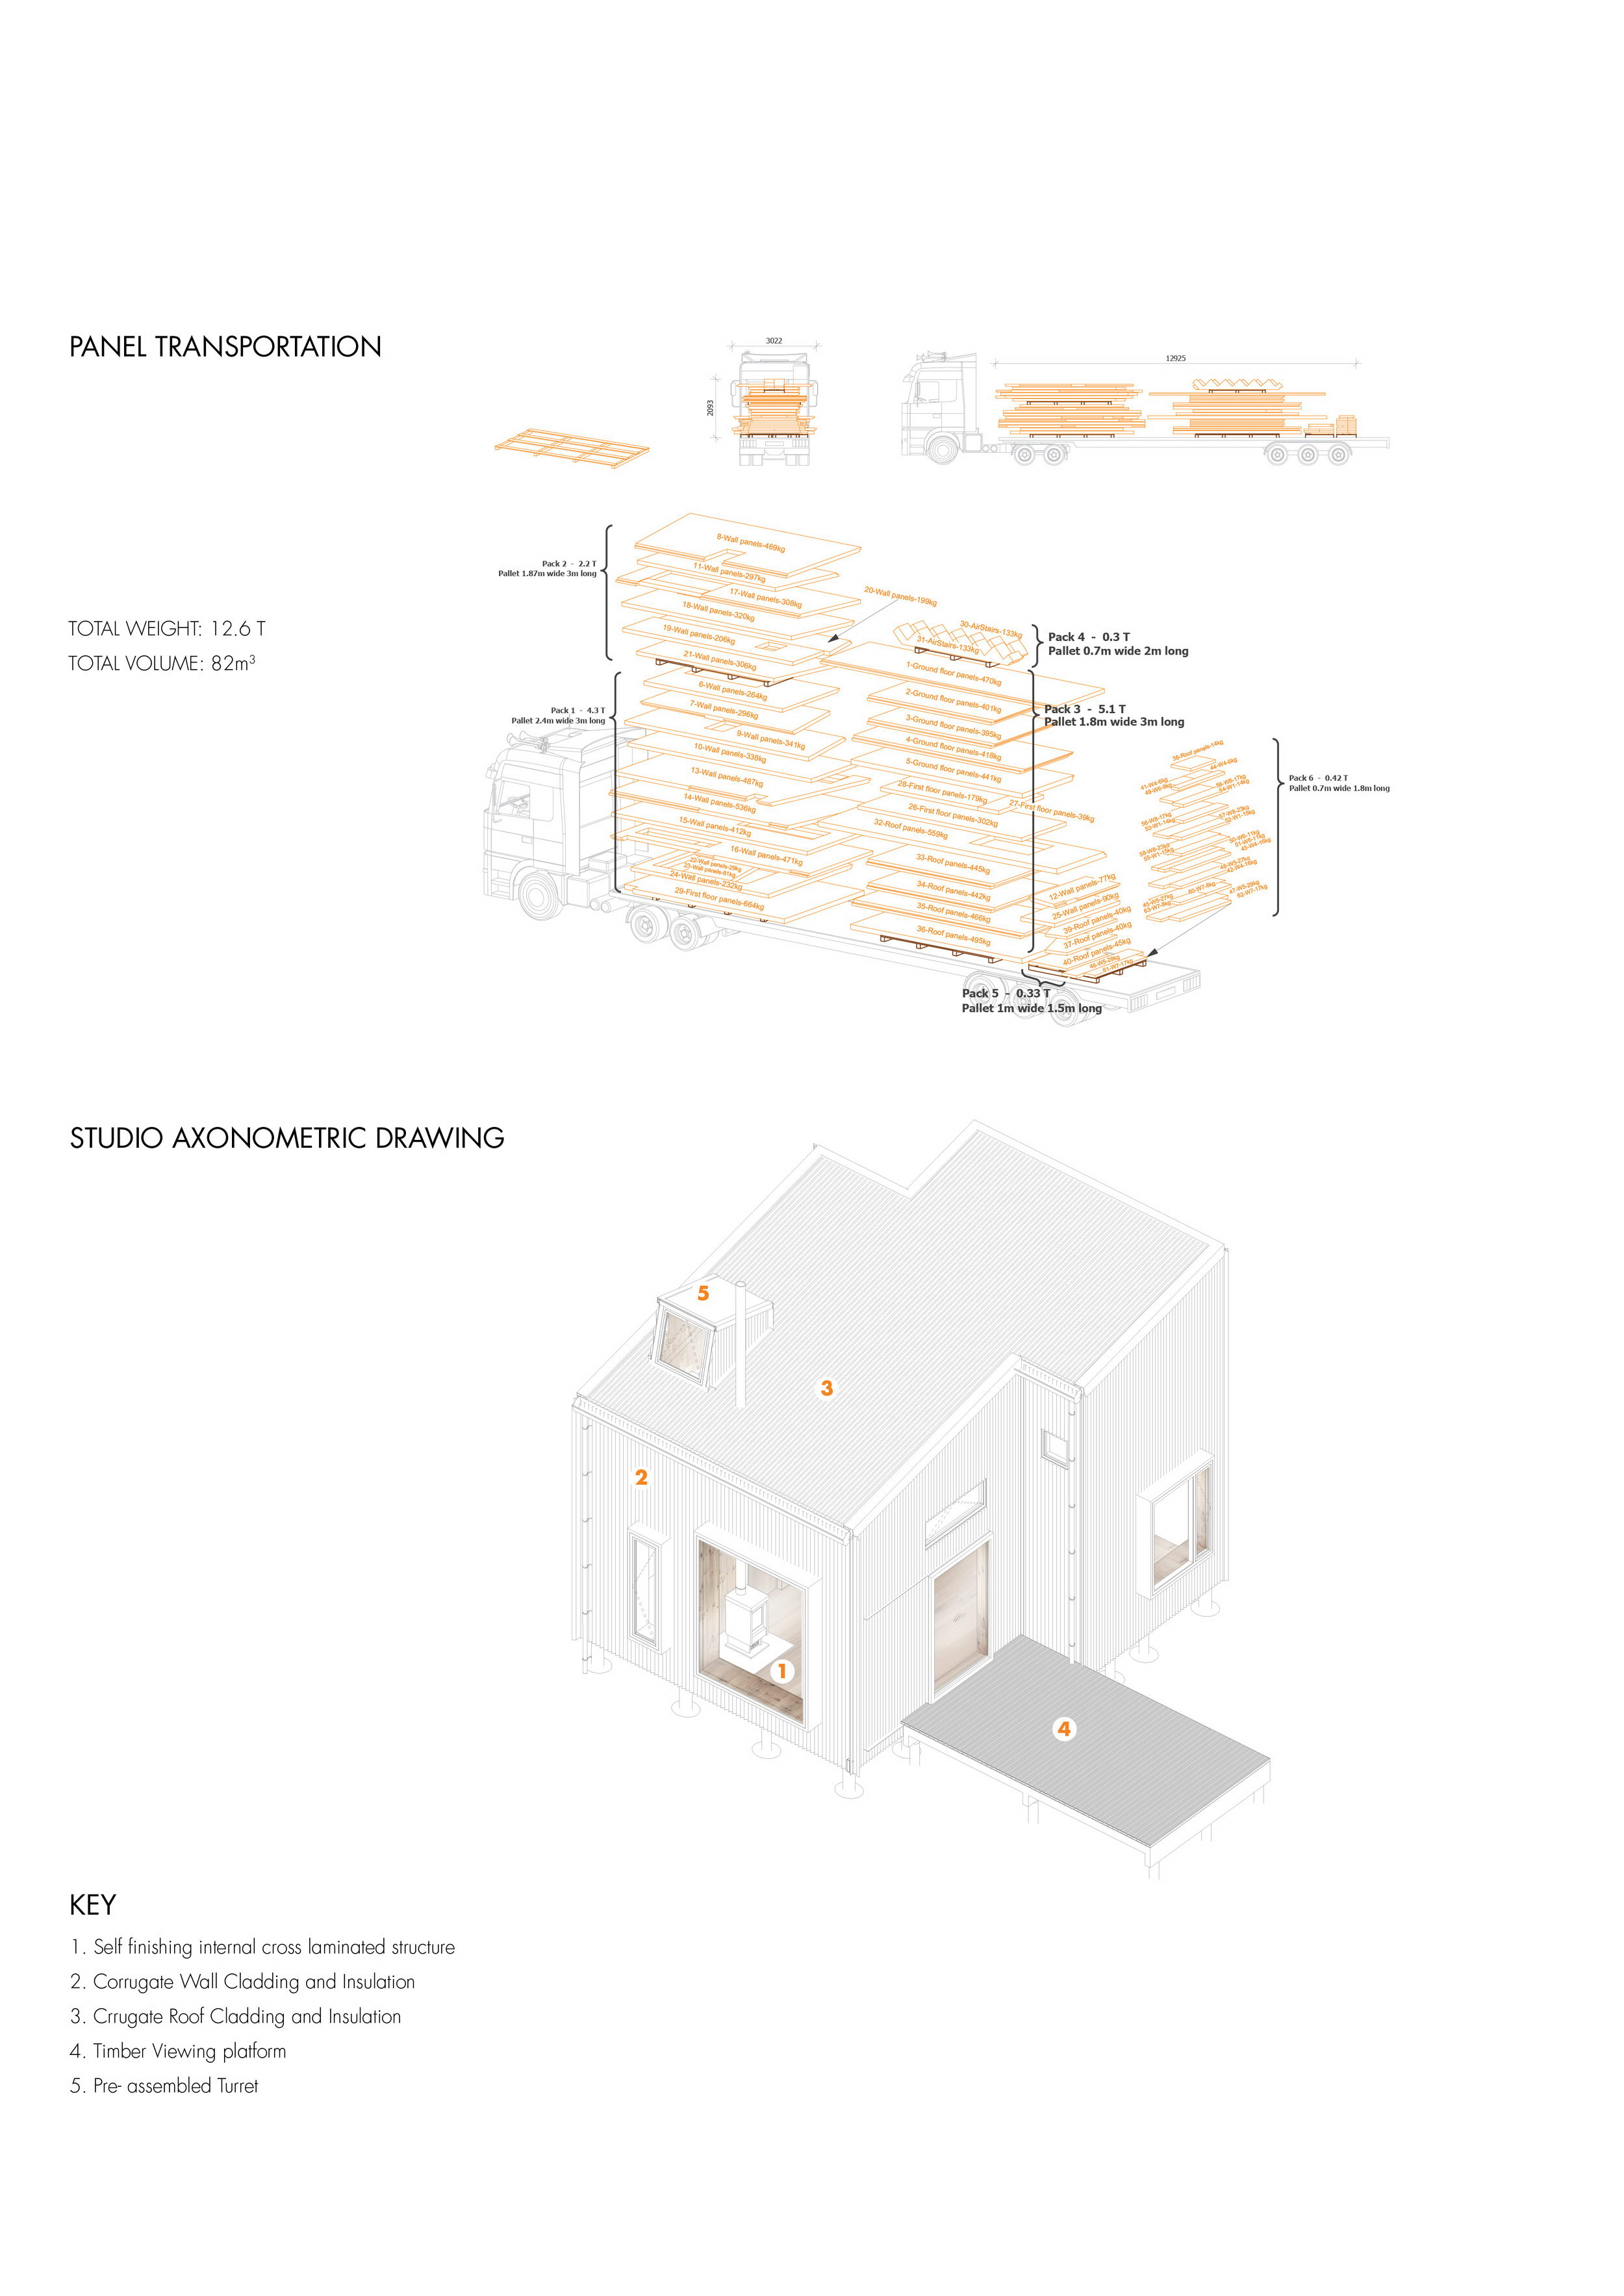 AB Studio Cabin by Copeland Associates Architects